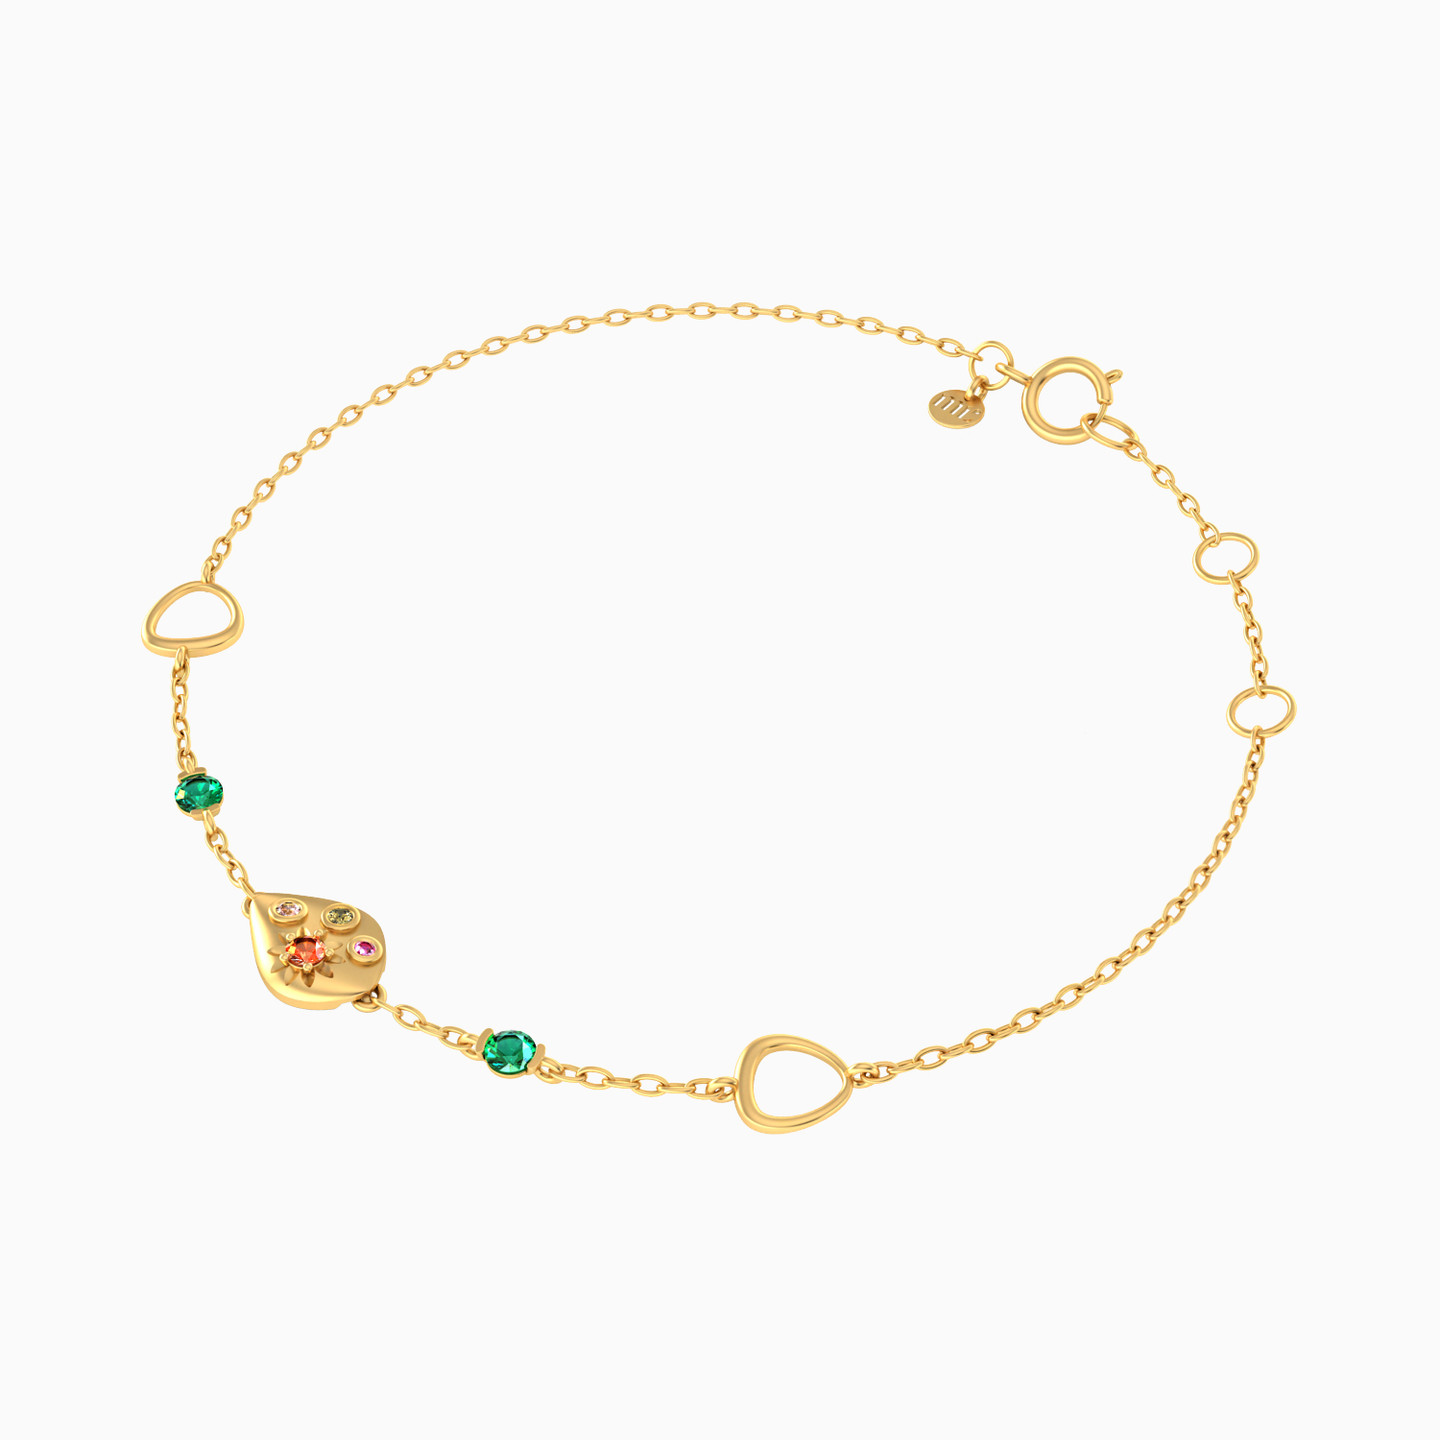 14K Gold Colored Stones Chain Bracelet - 2